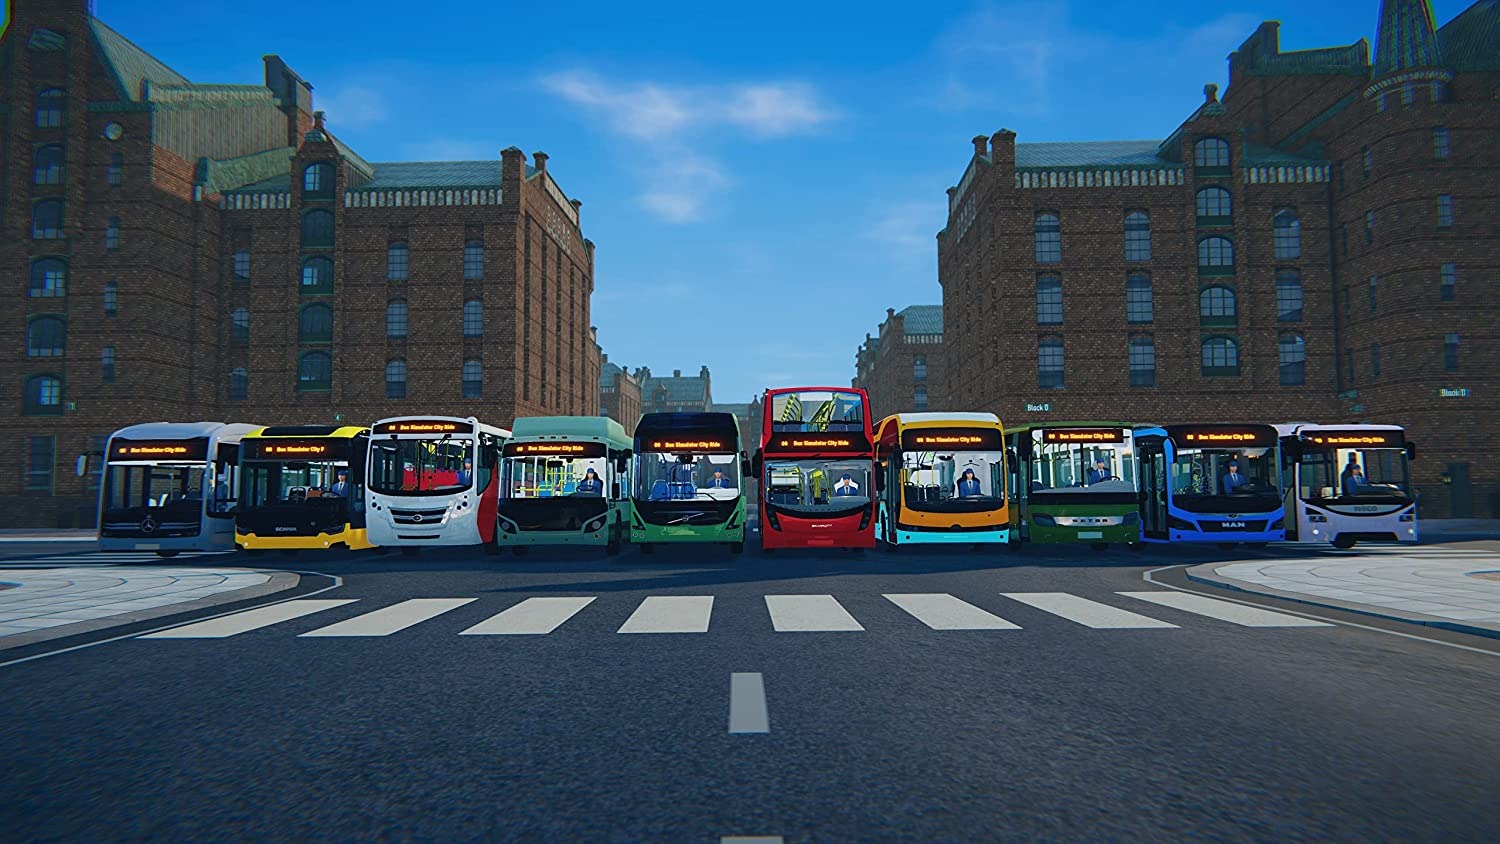 Bus Simulator - City Ride (Switch)